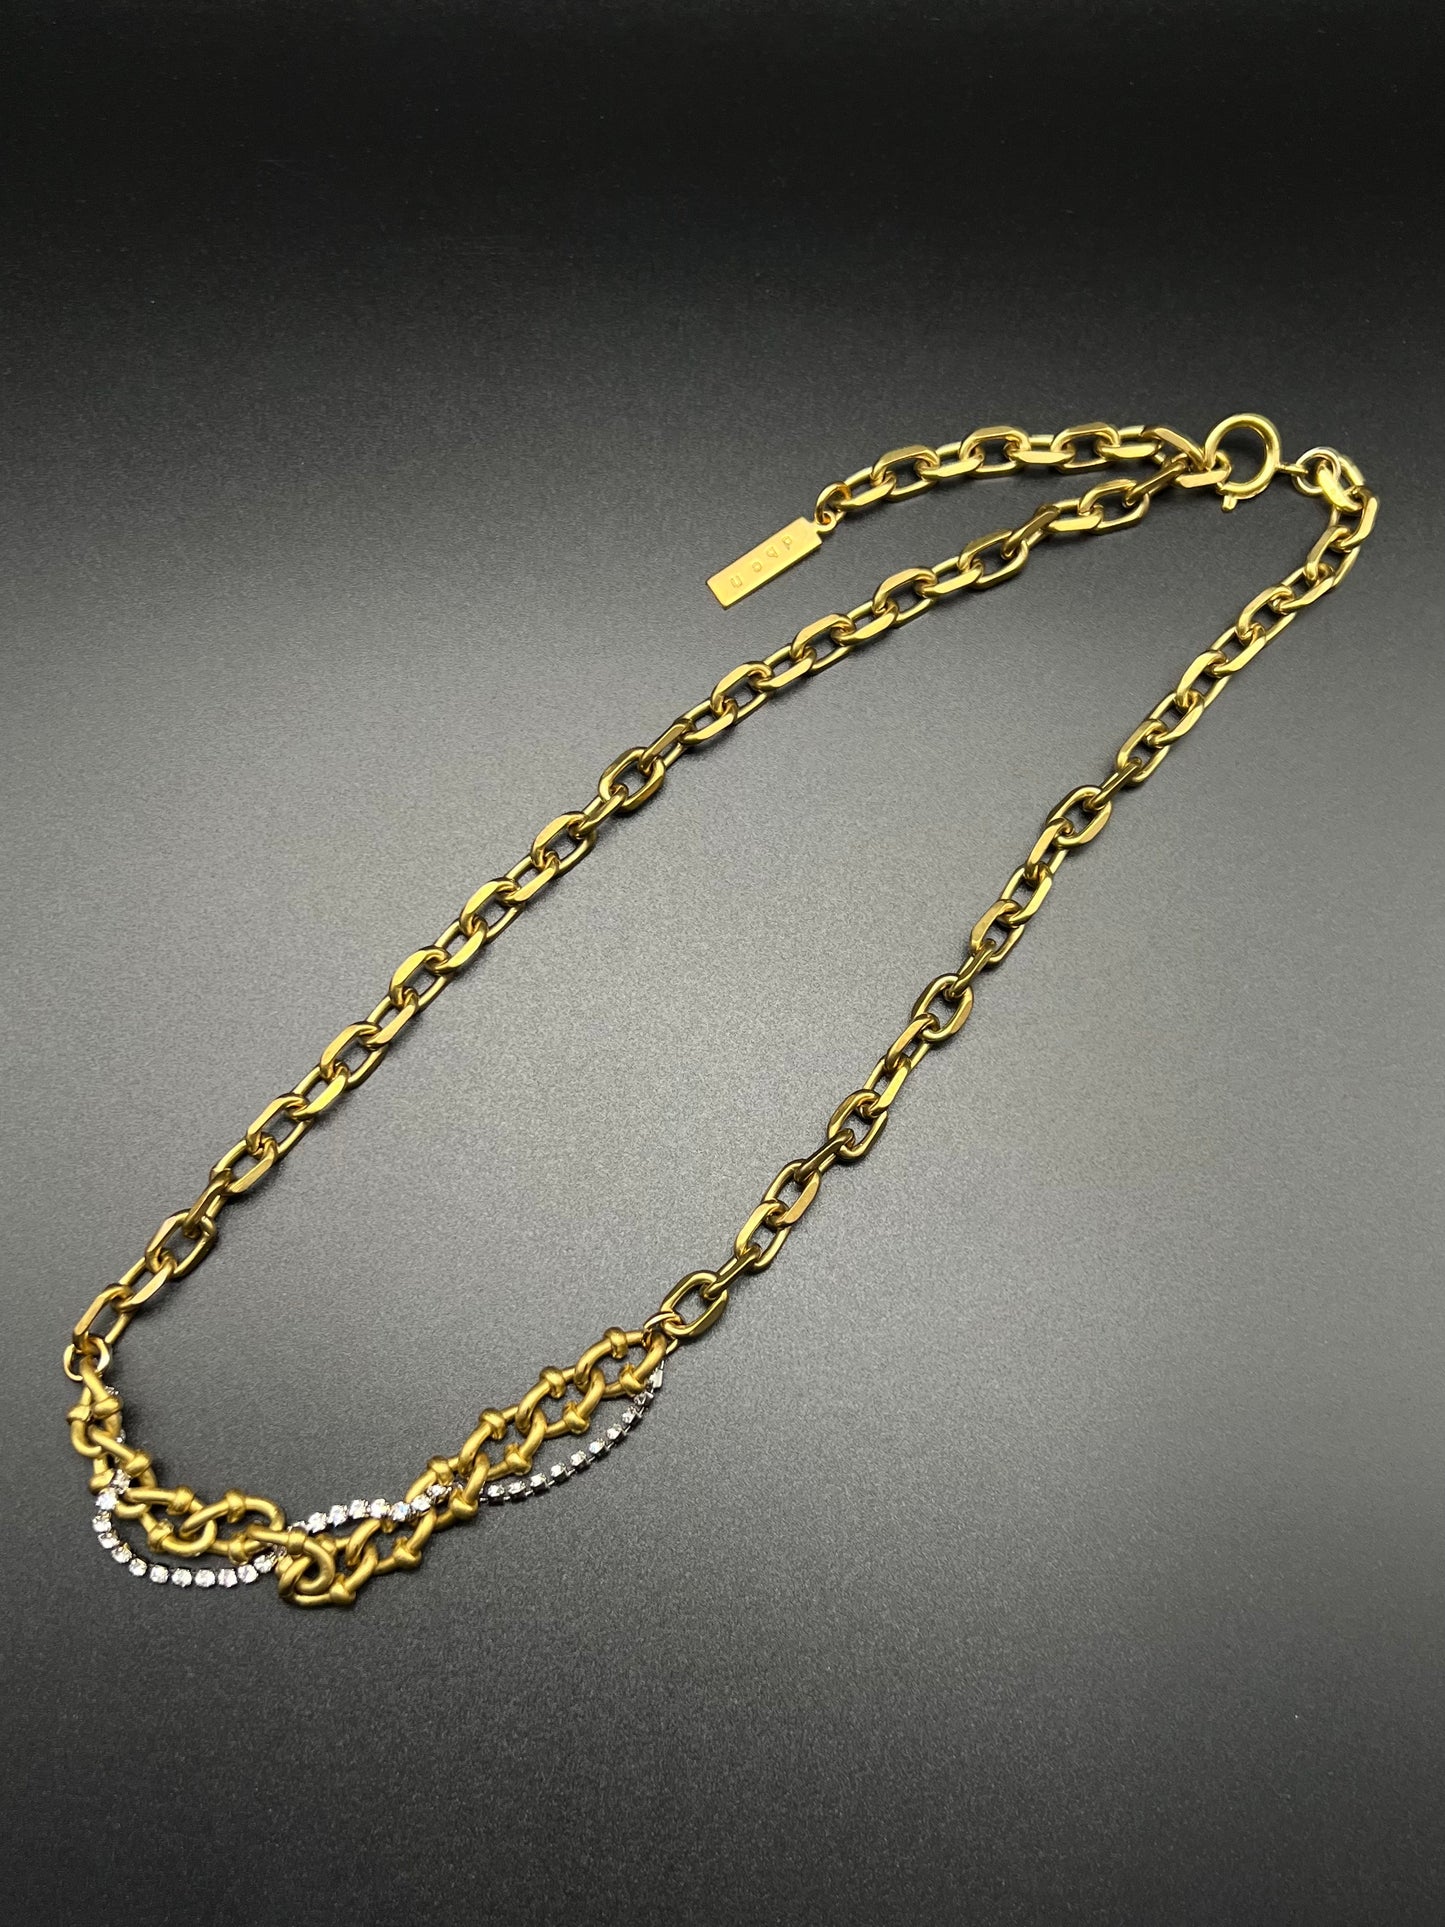 1111Chain bijou necklace - Gold